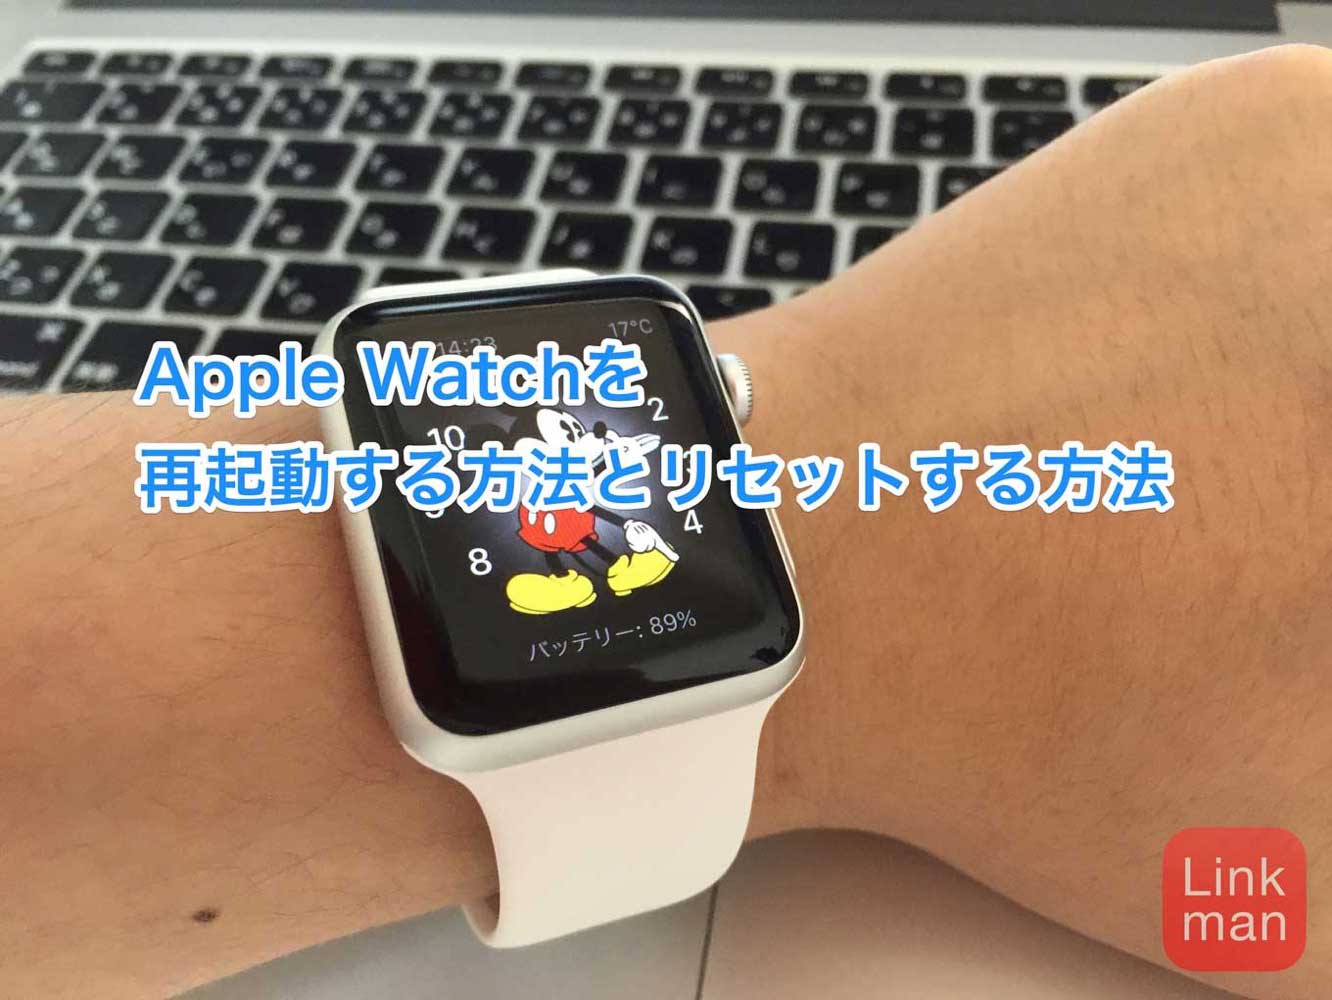 Applewatch saikidou 01